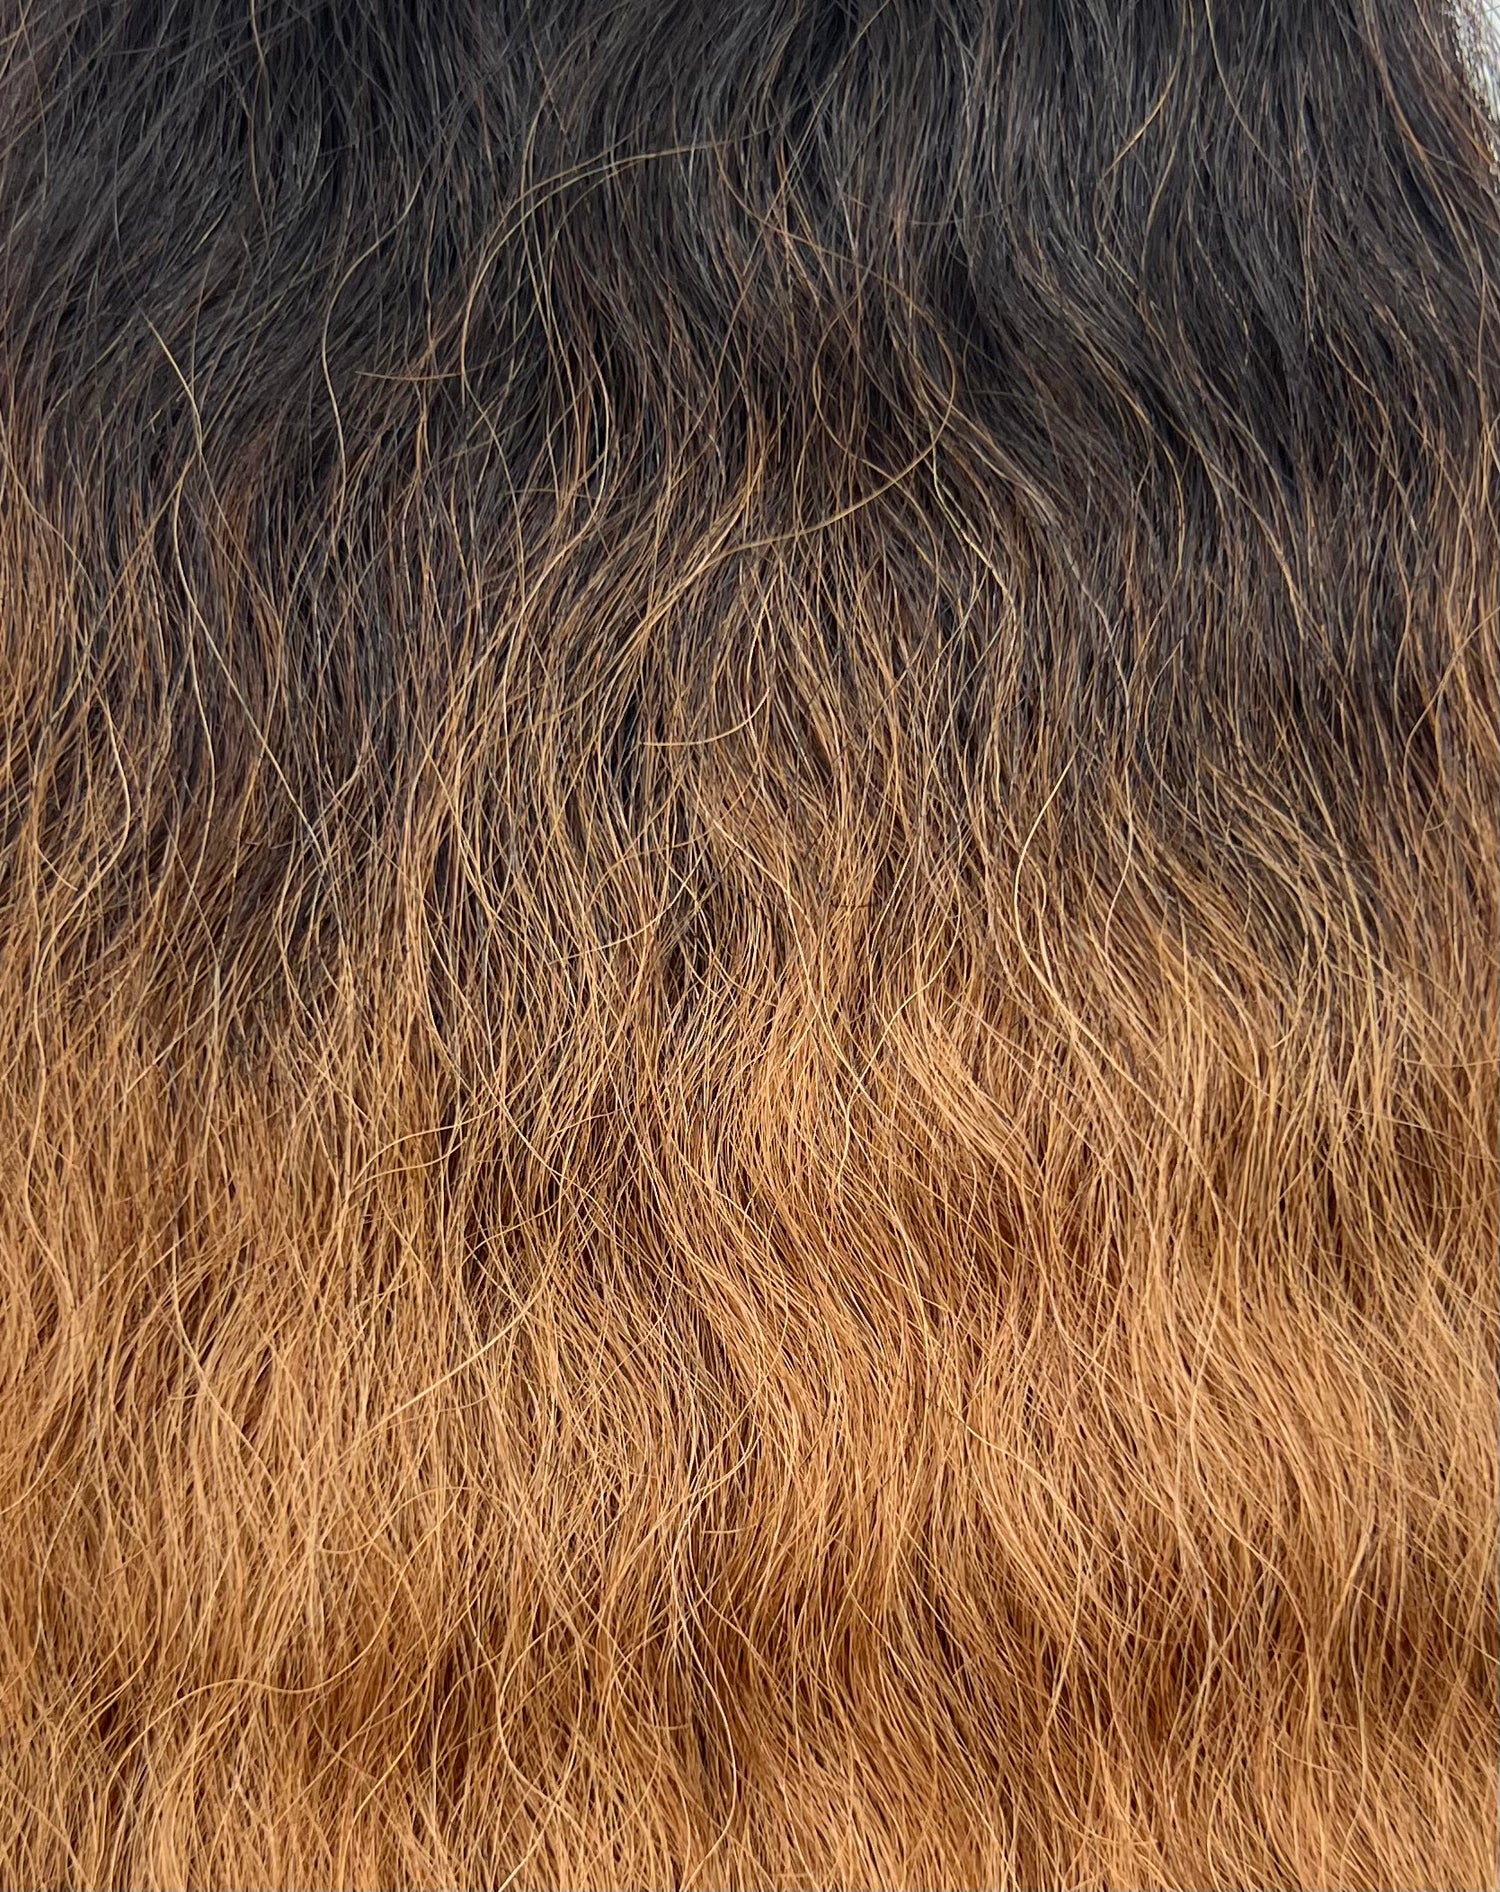 TRESS Collection Human Hair Blend - Super Bulk 16 - VIP Extensions